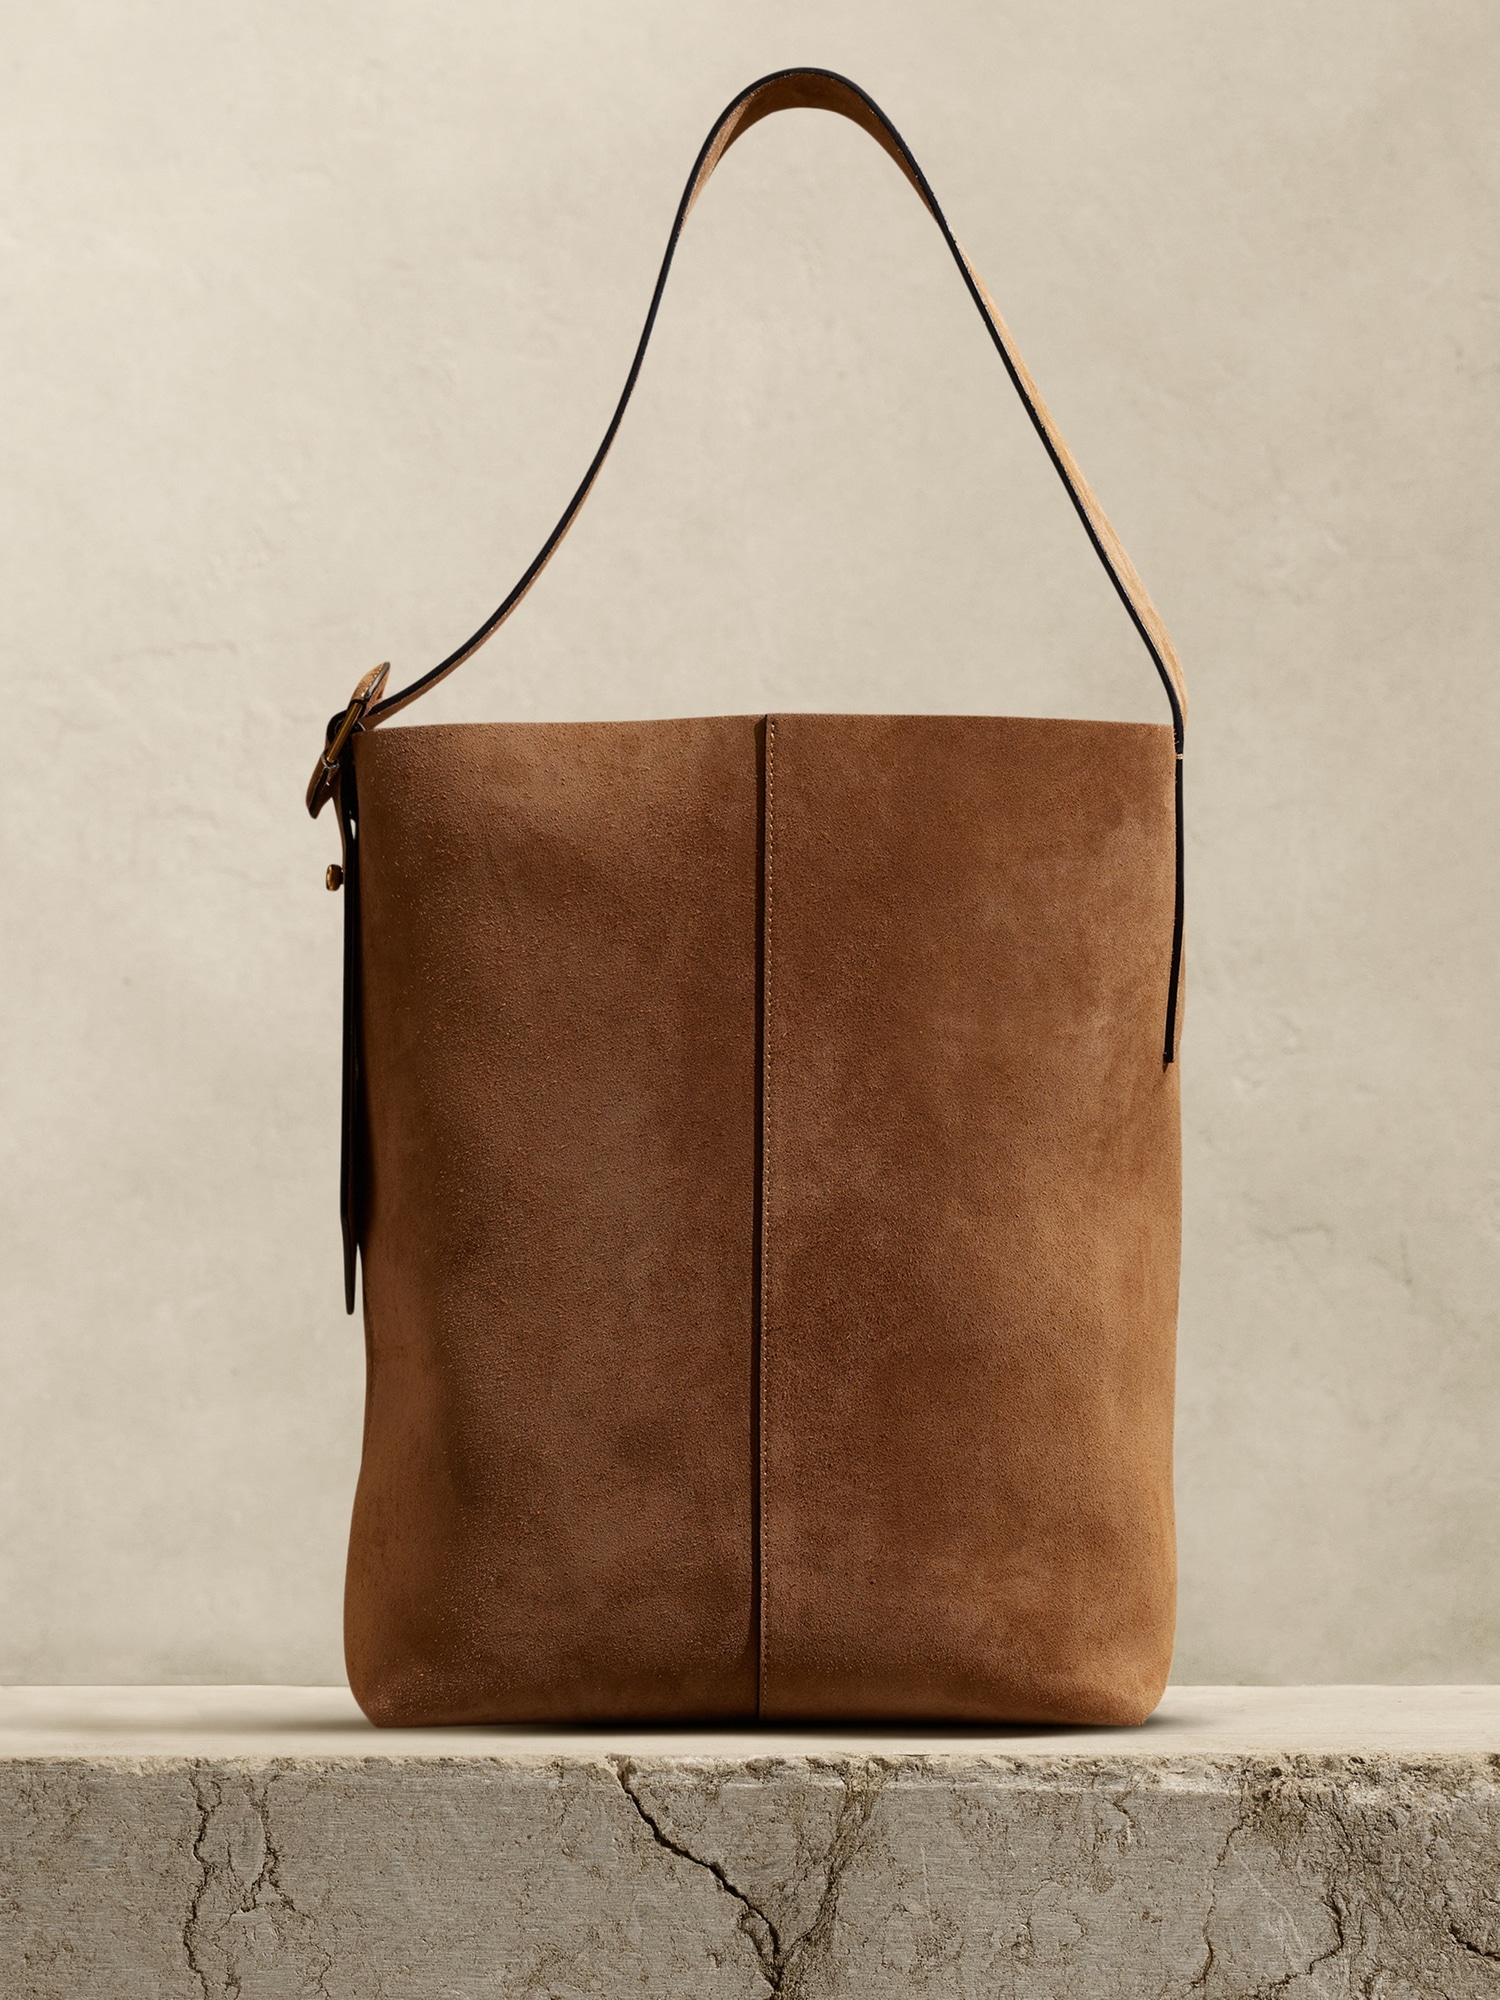 Buy Rassasier Lulu Leather Bucket Bag in Mule Fawn Brown Finish at Amazon.in